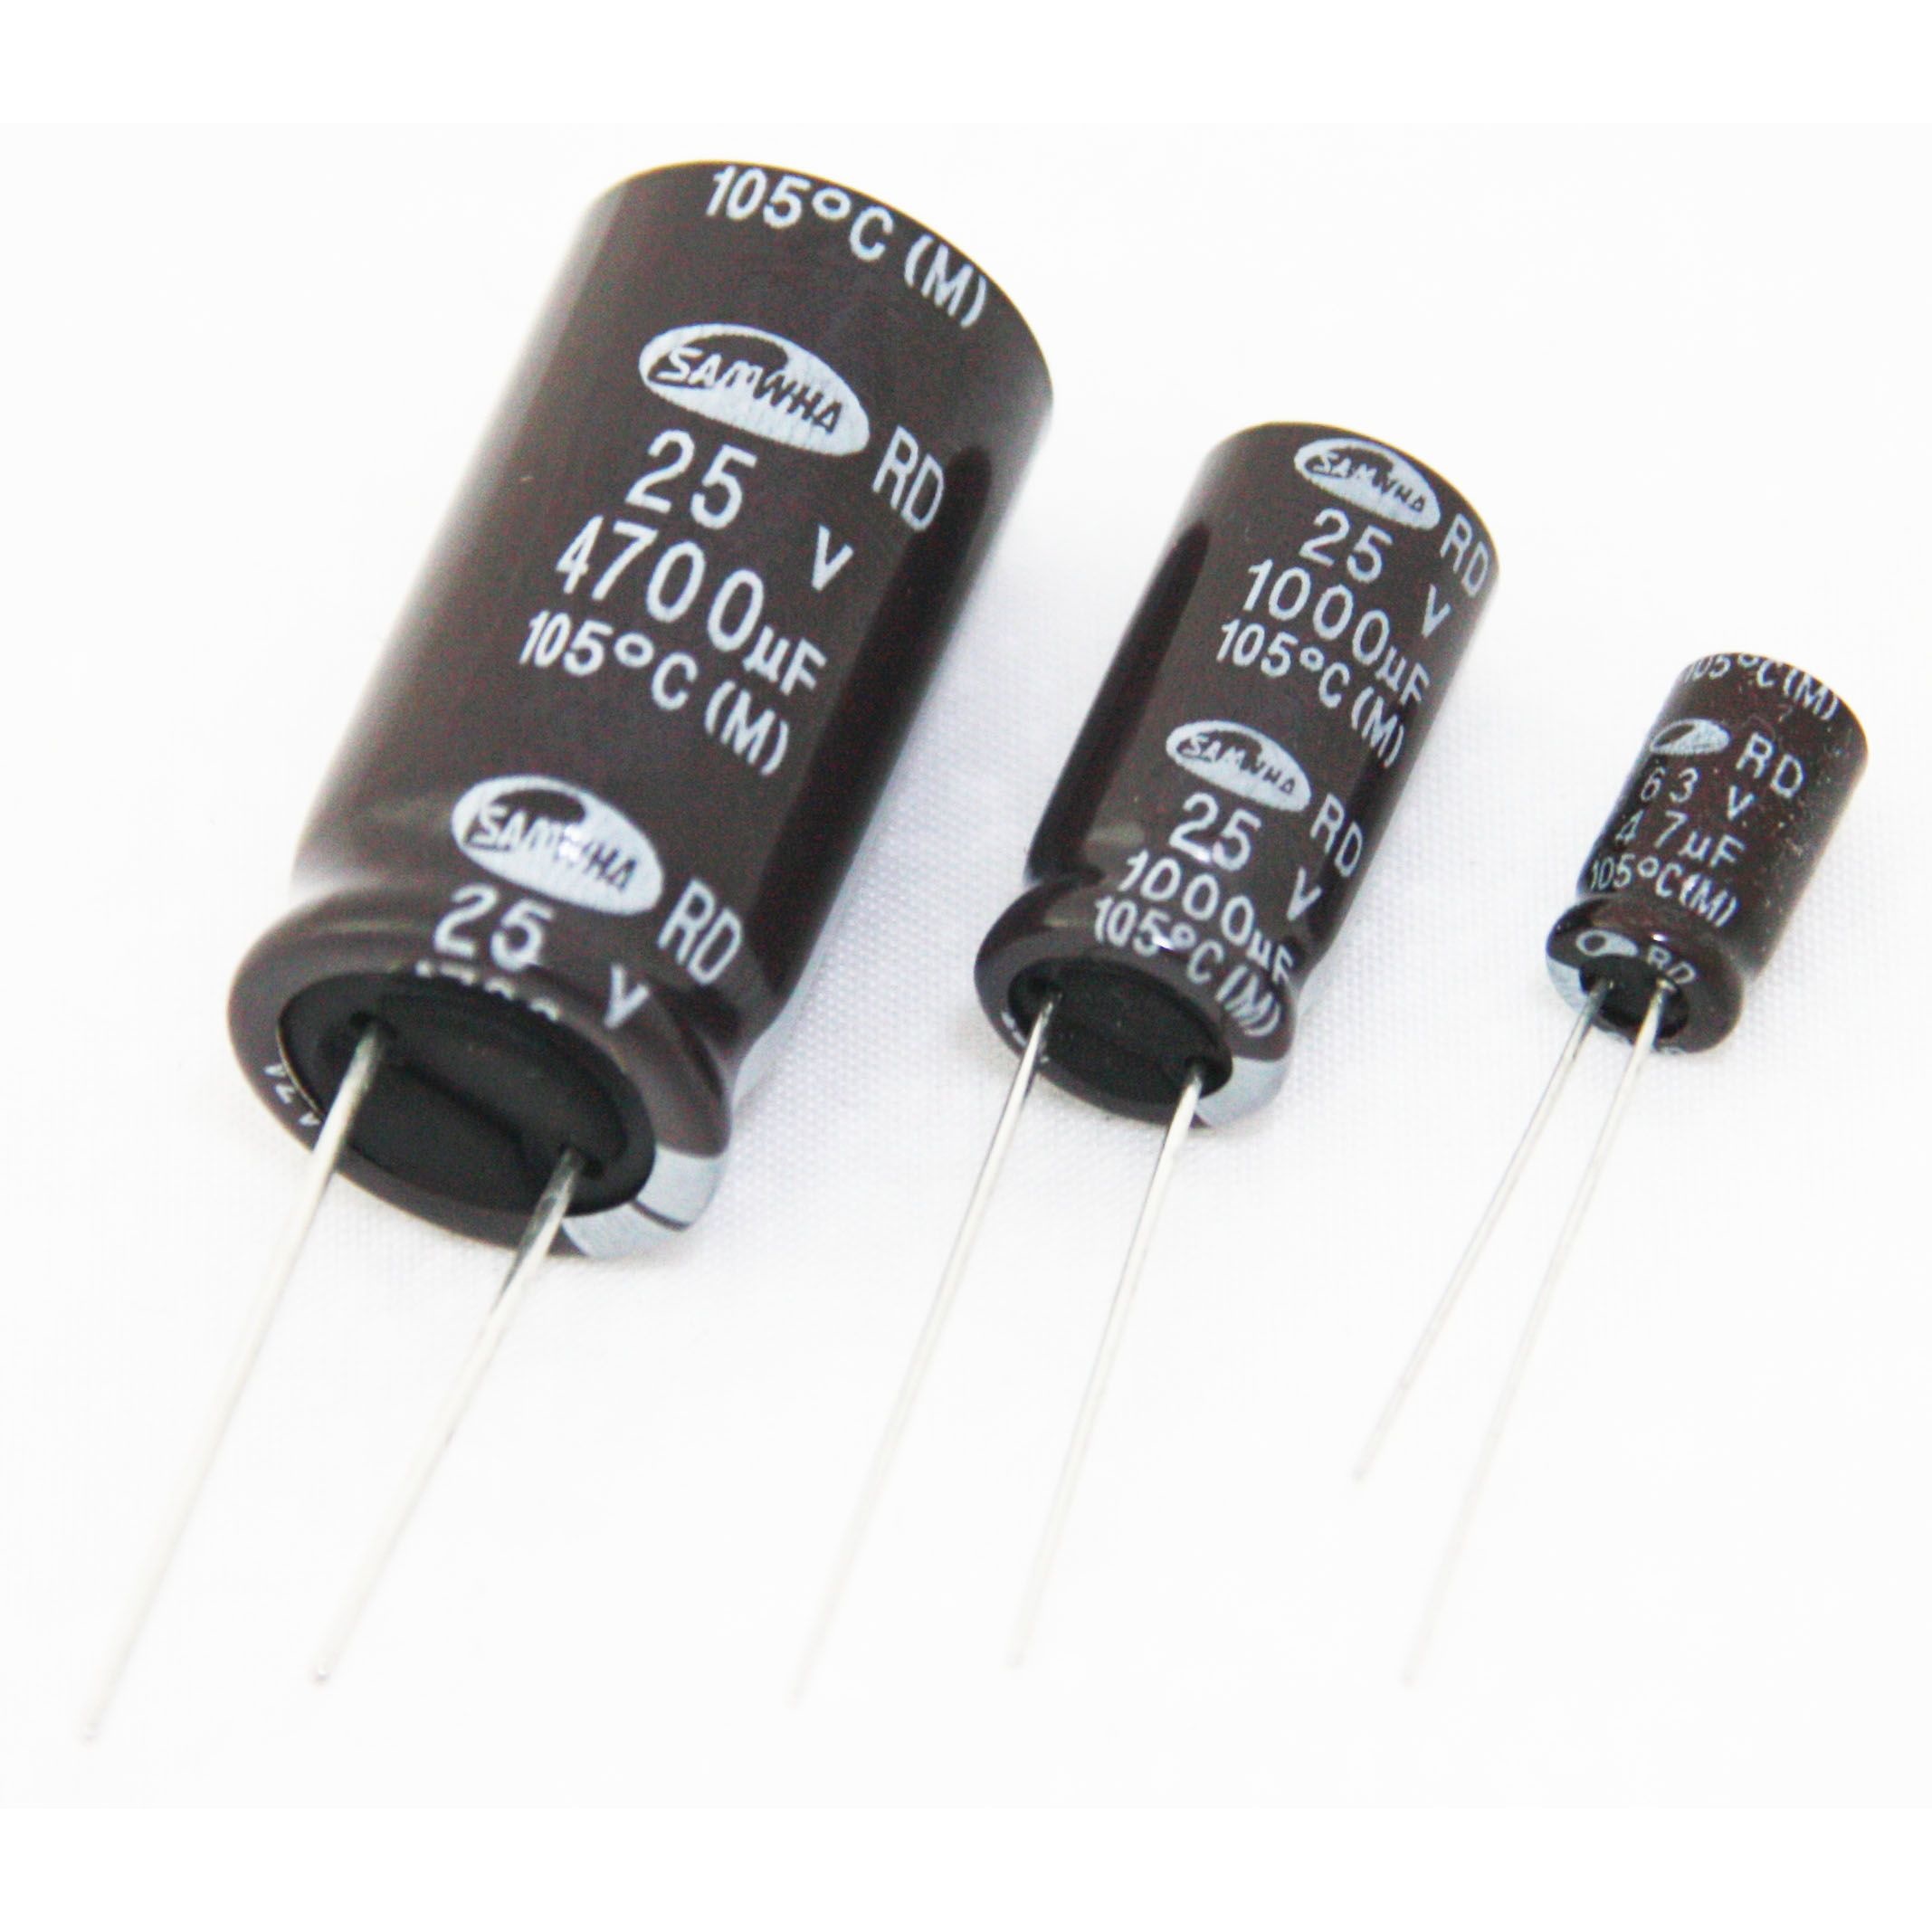 Electrolytic capacitor 105° 10uF-450V